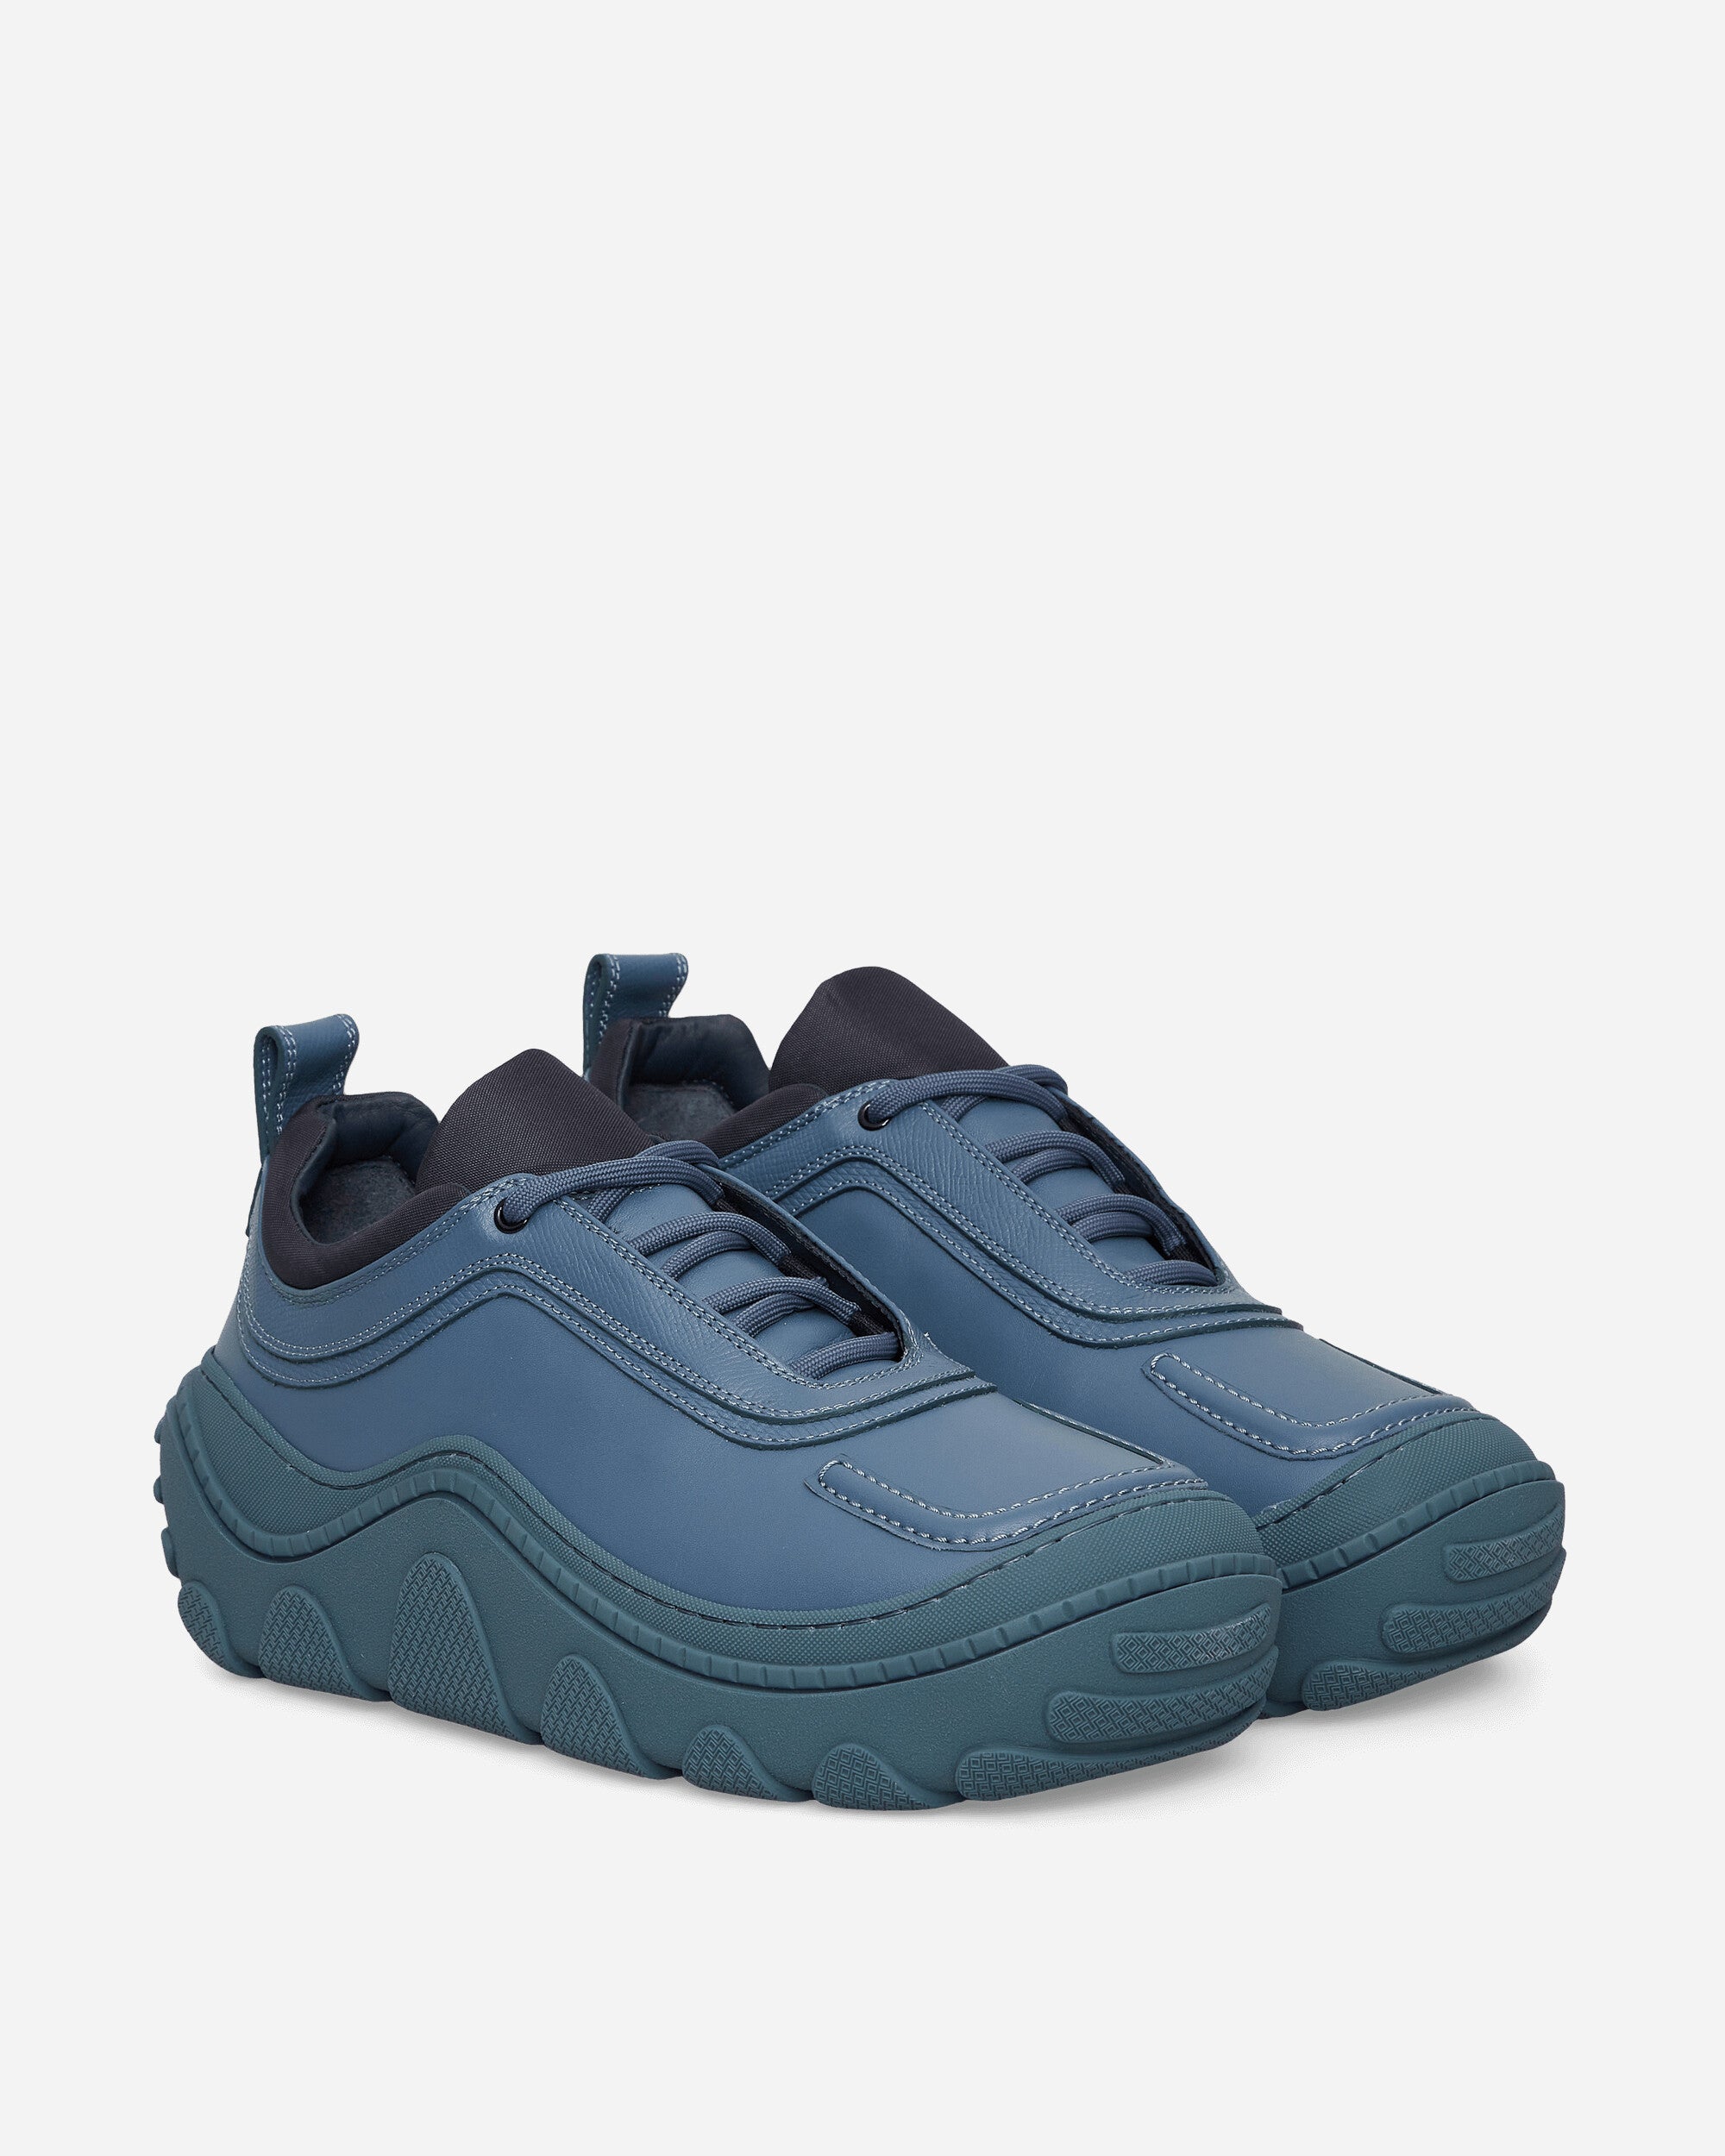 Kiko Kostadinov Tonkin Lace Up Shoe Air Blue  Sneakers Low KKSS23FT01-95  001